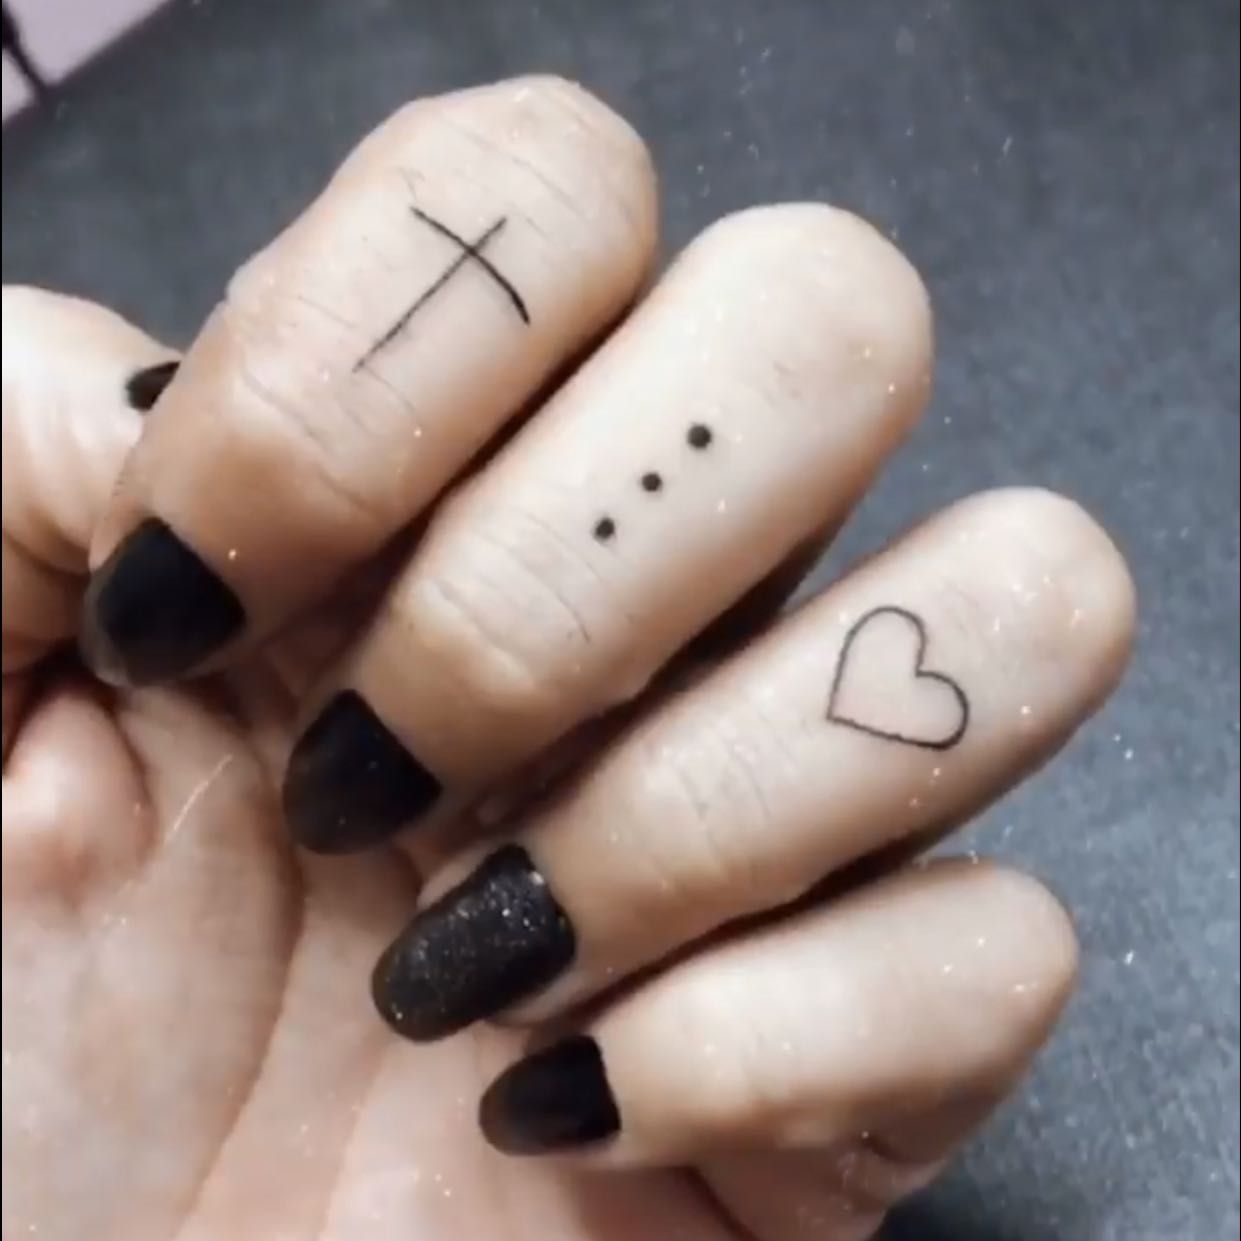 Portfólio de 1 Mini tattoo no dedo